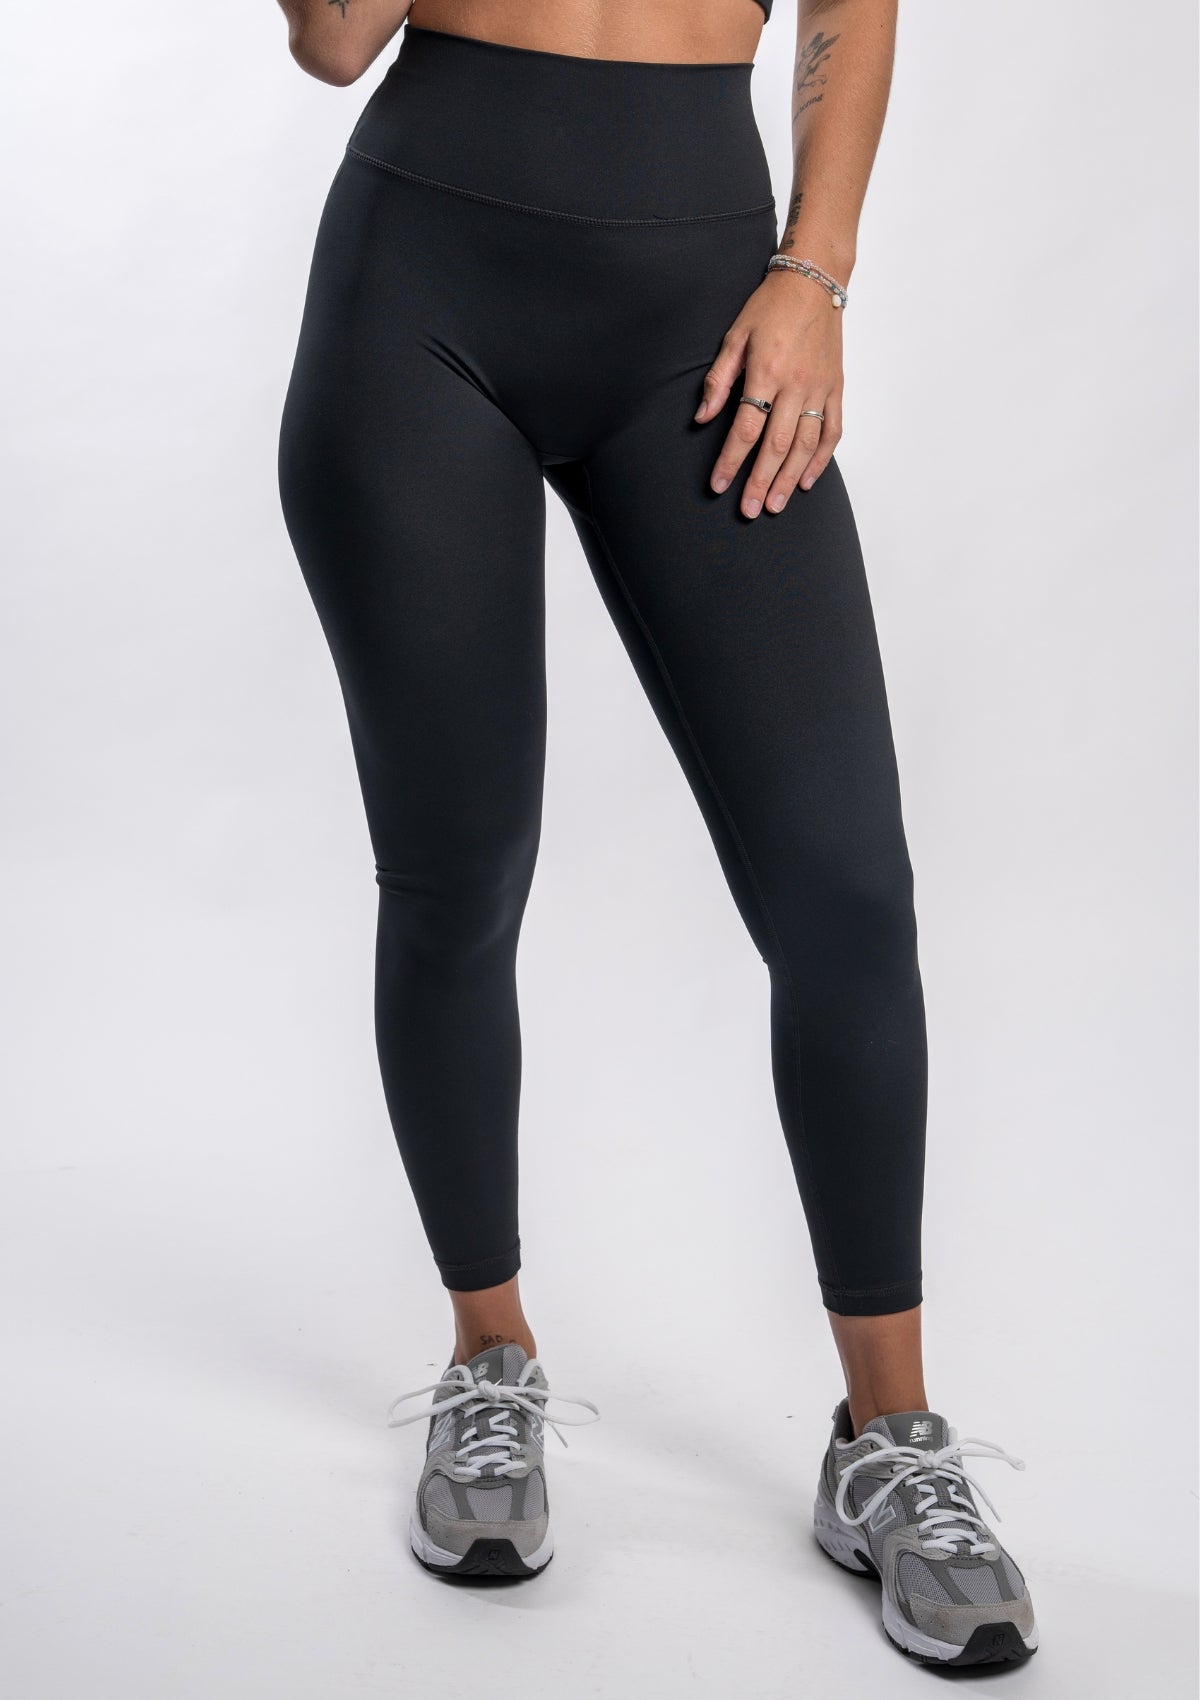 black sports leggings  Halifax Shopping Centre